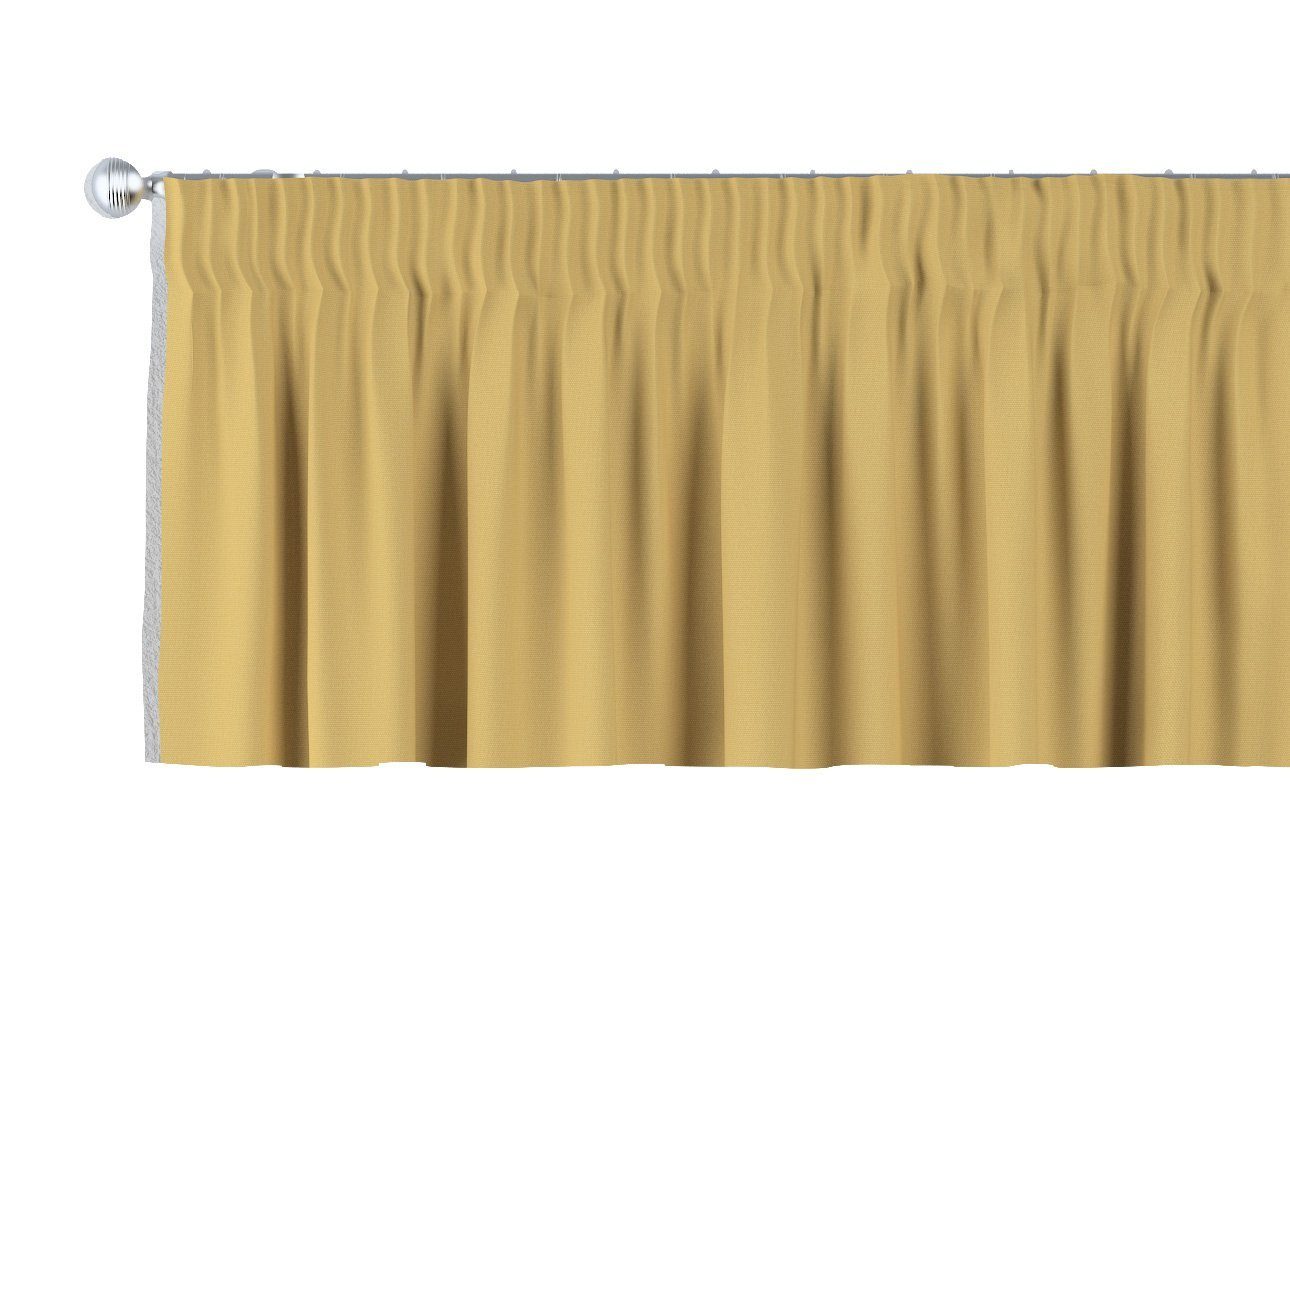 Vorhang mit Kräuselband 130 x 40 cm, Cotton Panama, Dekoria chiffongelb